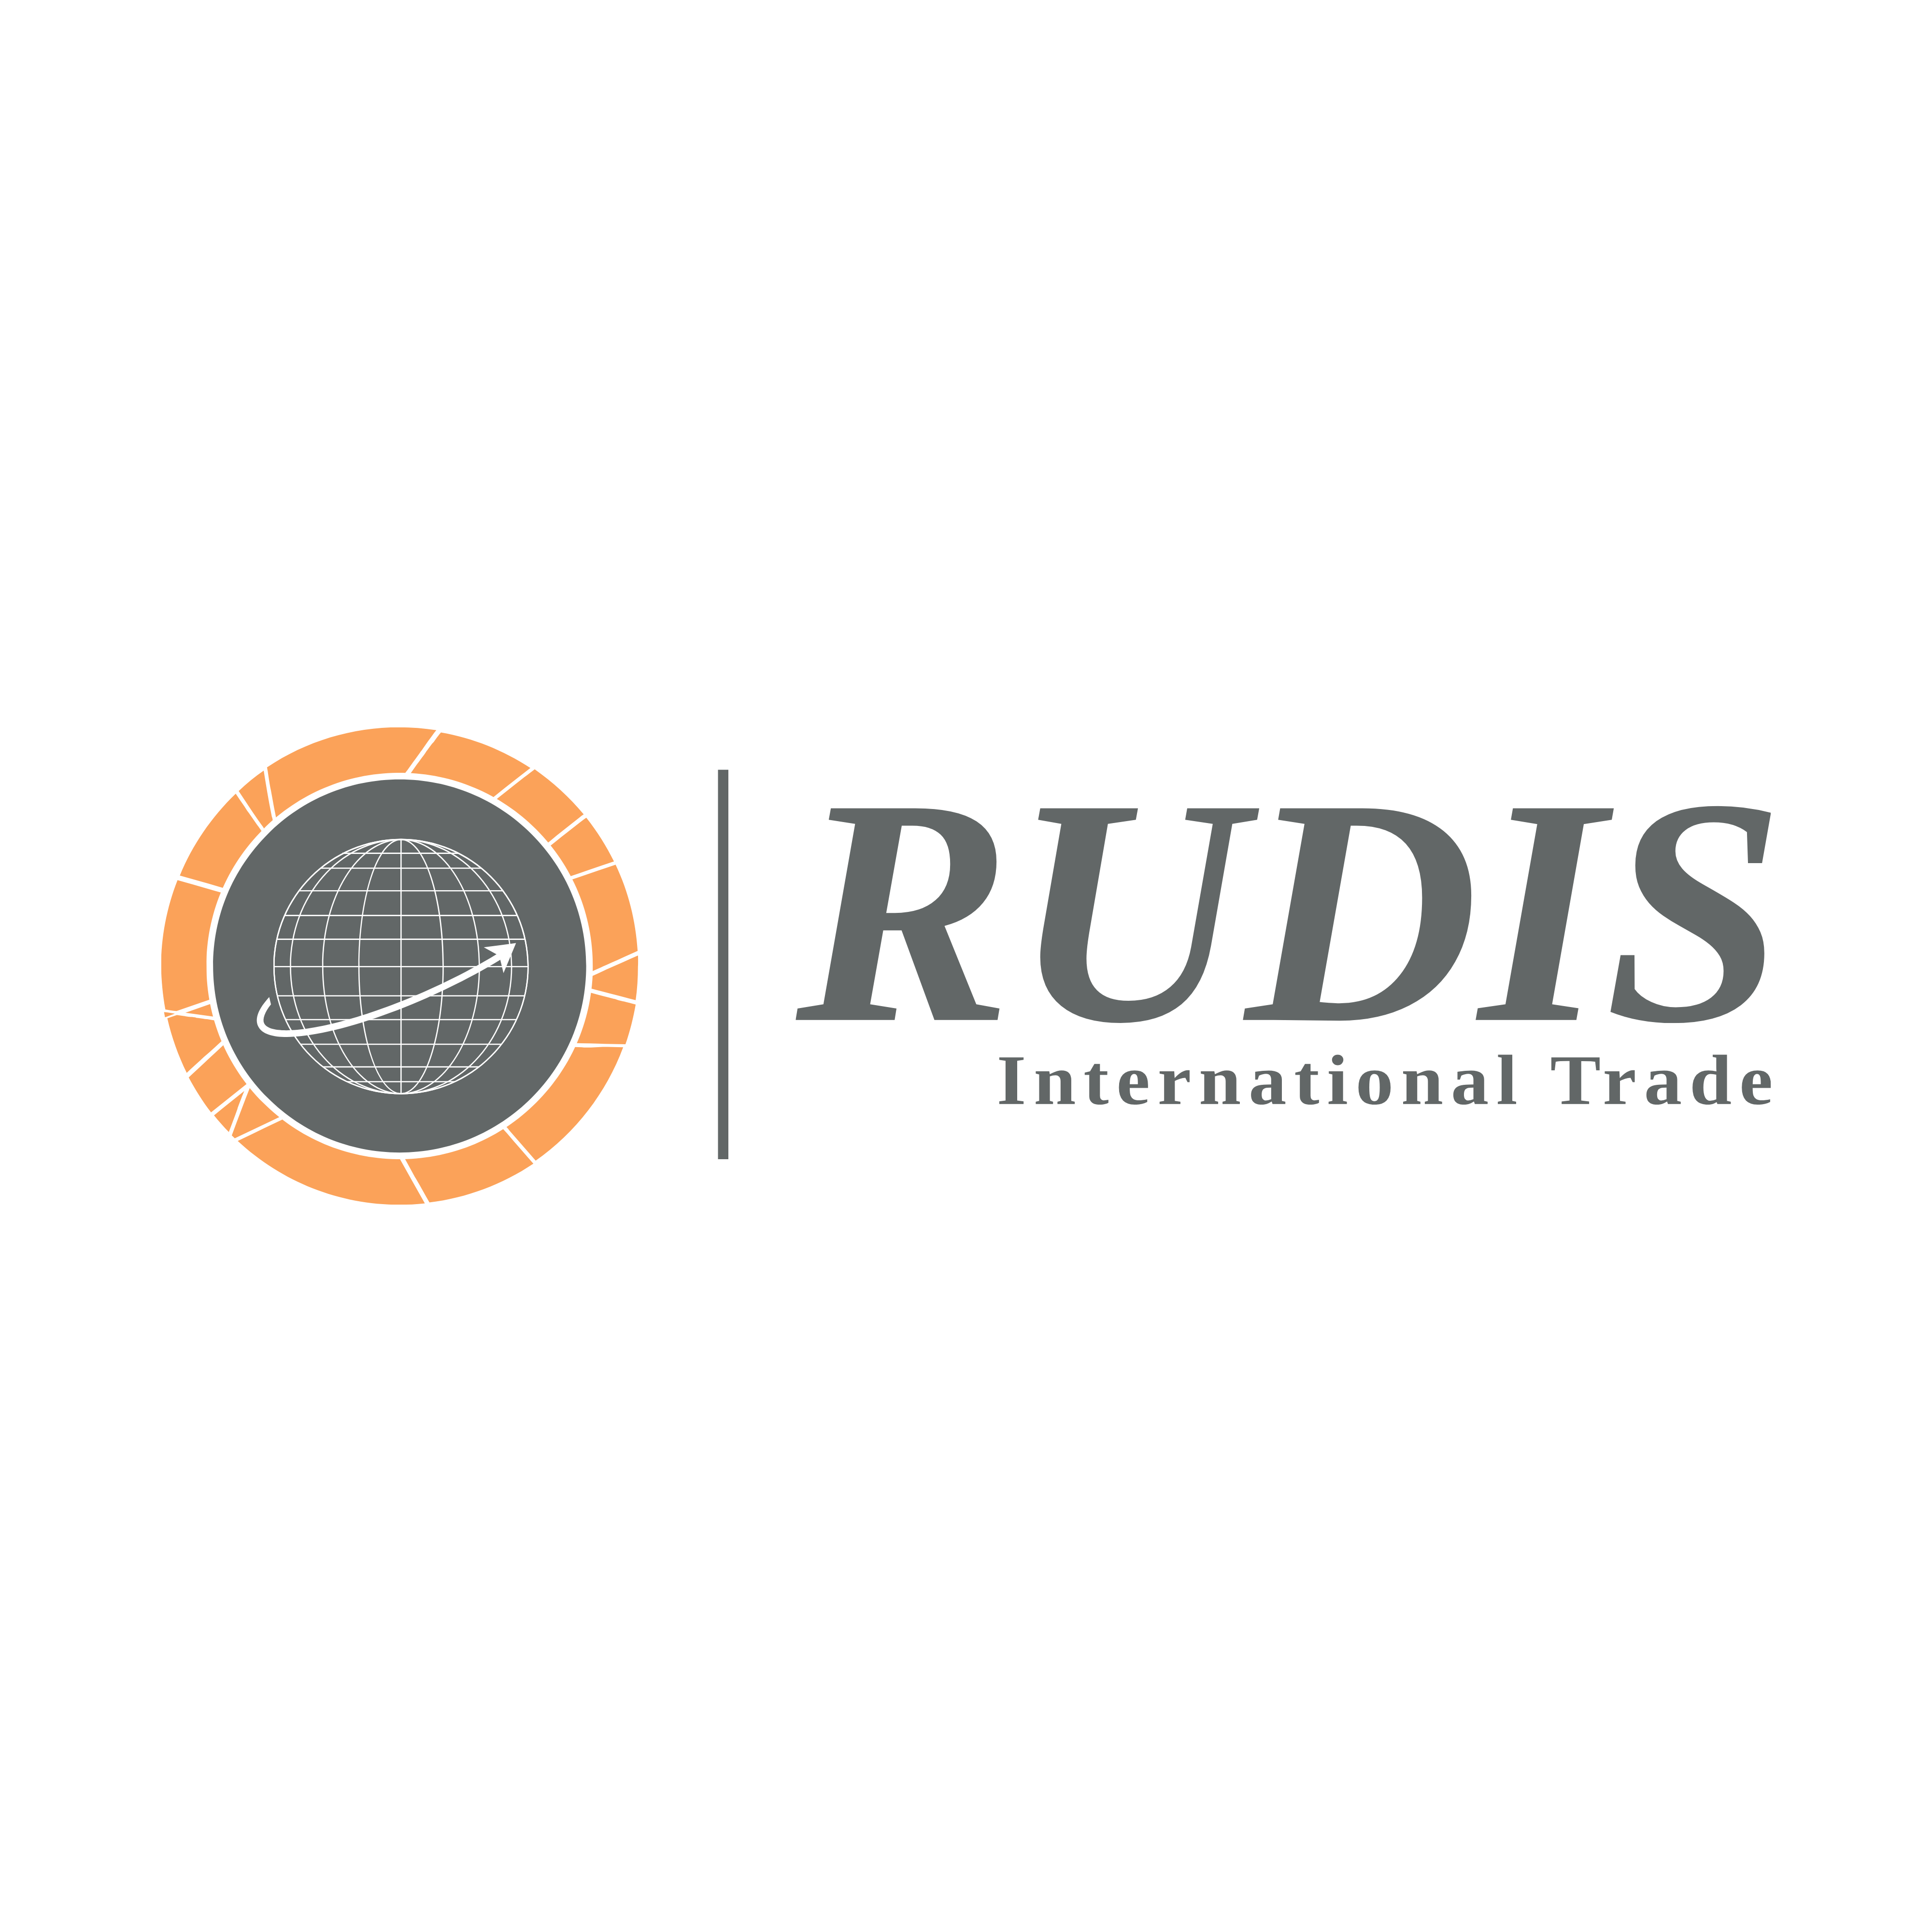 Rudis International Trade